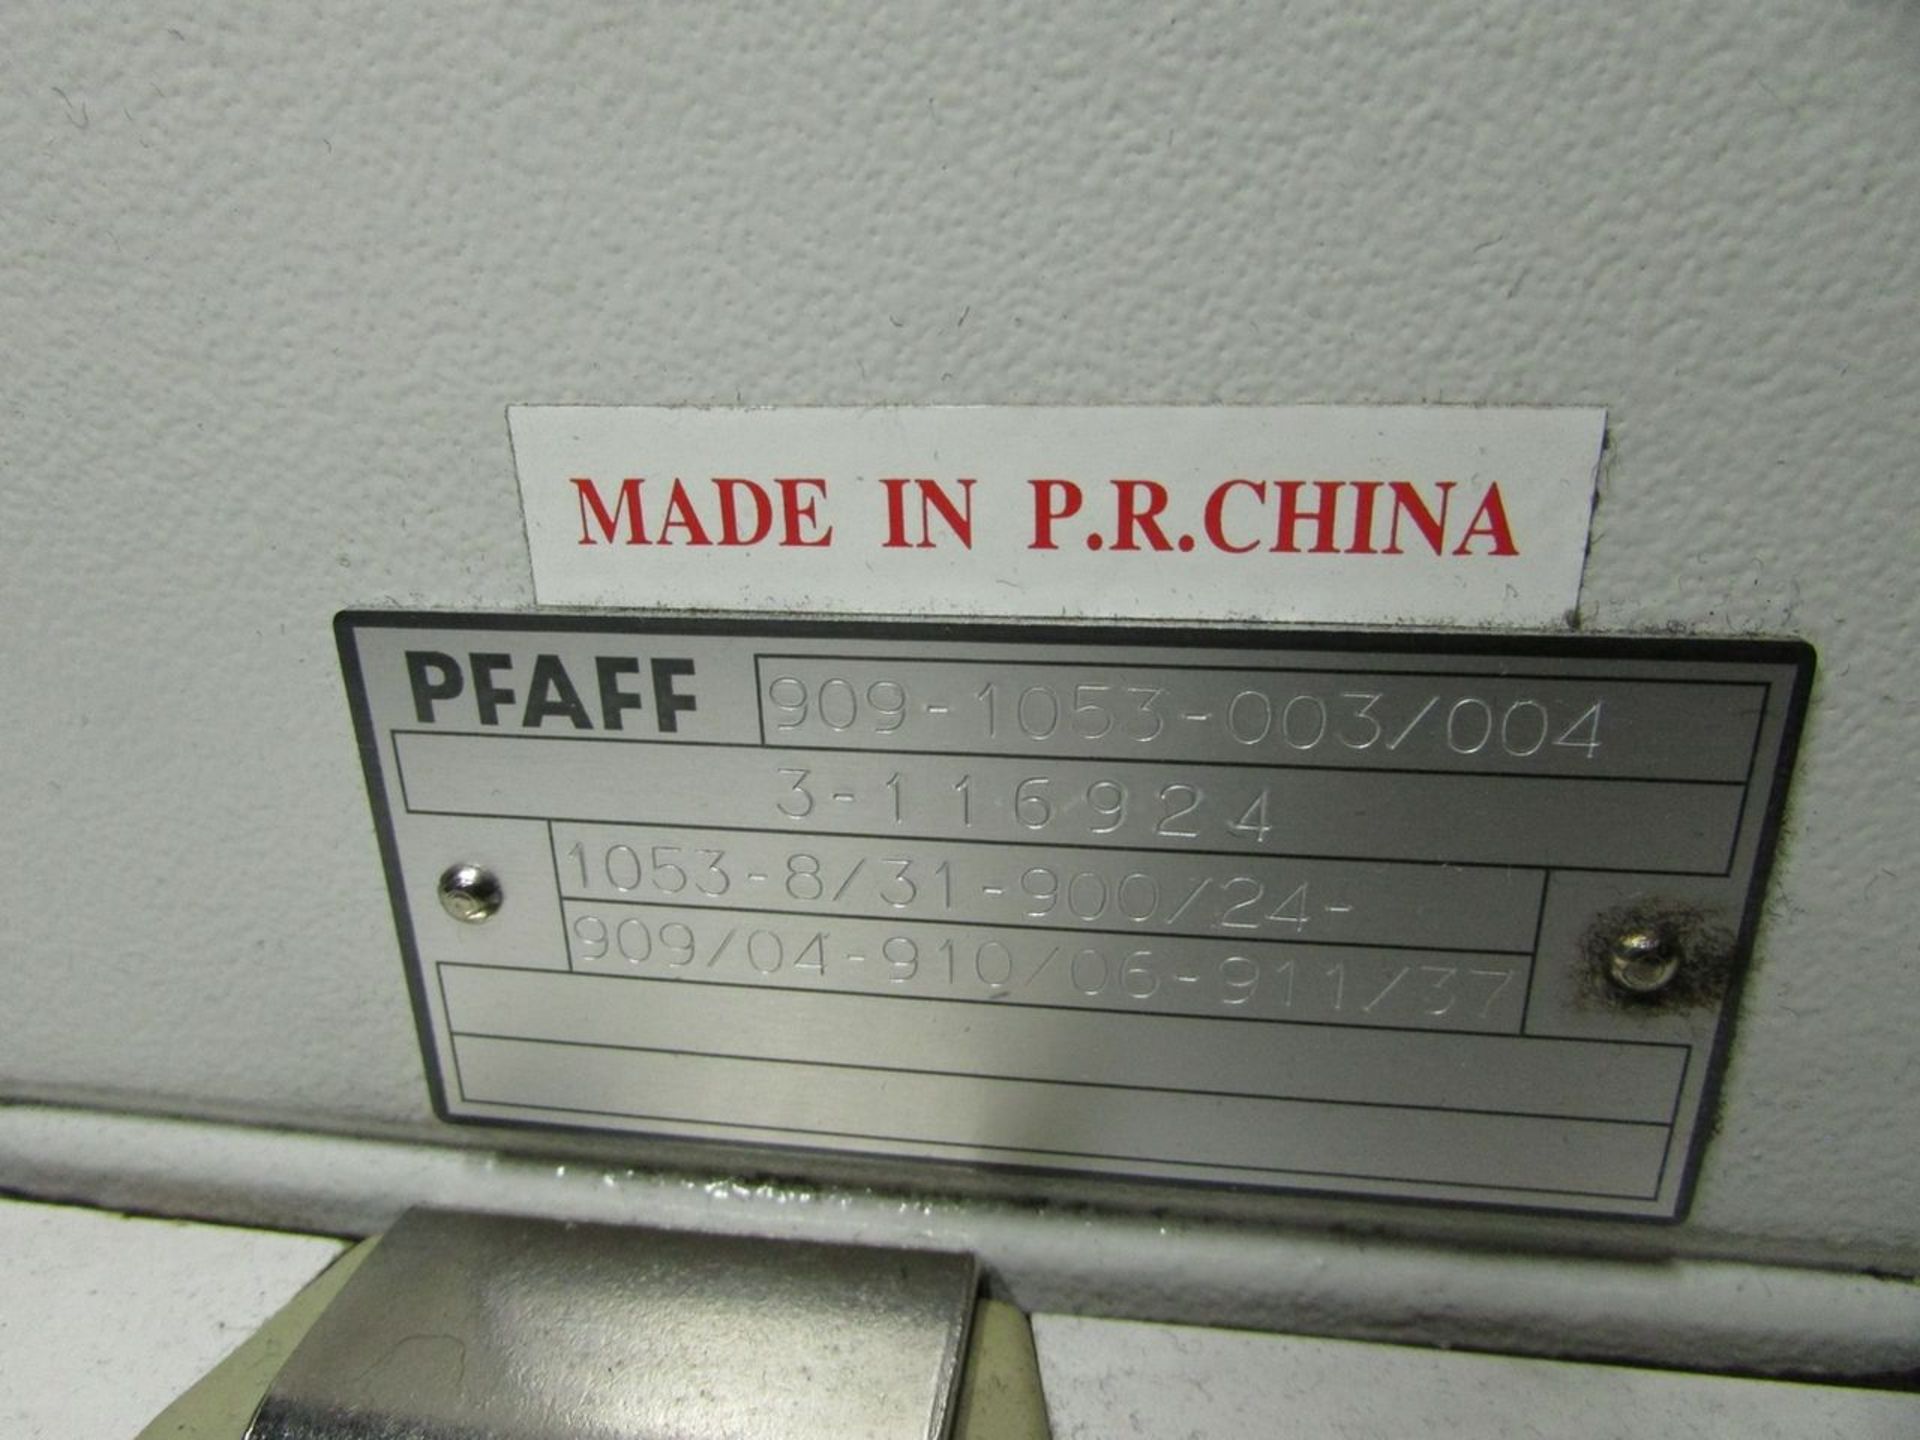 Pfaff Model 1053-8/31-900/24 (S/N: 3-116924) Single Needle Lockstitch Sewing Machine, Pfaff Stitch - Image 9 of 9